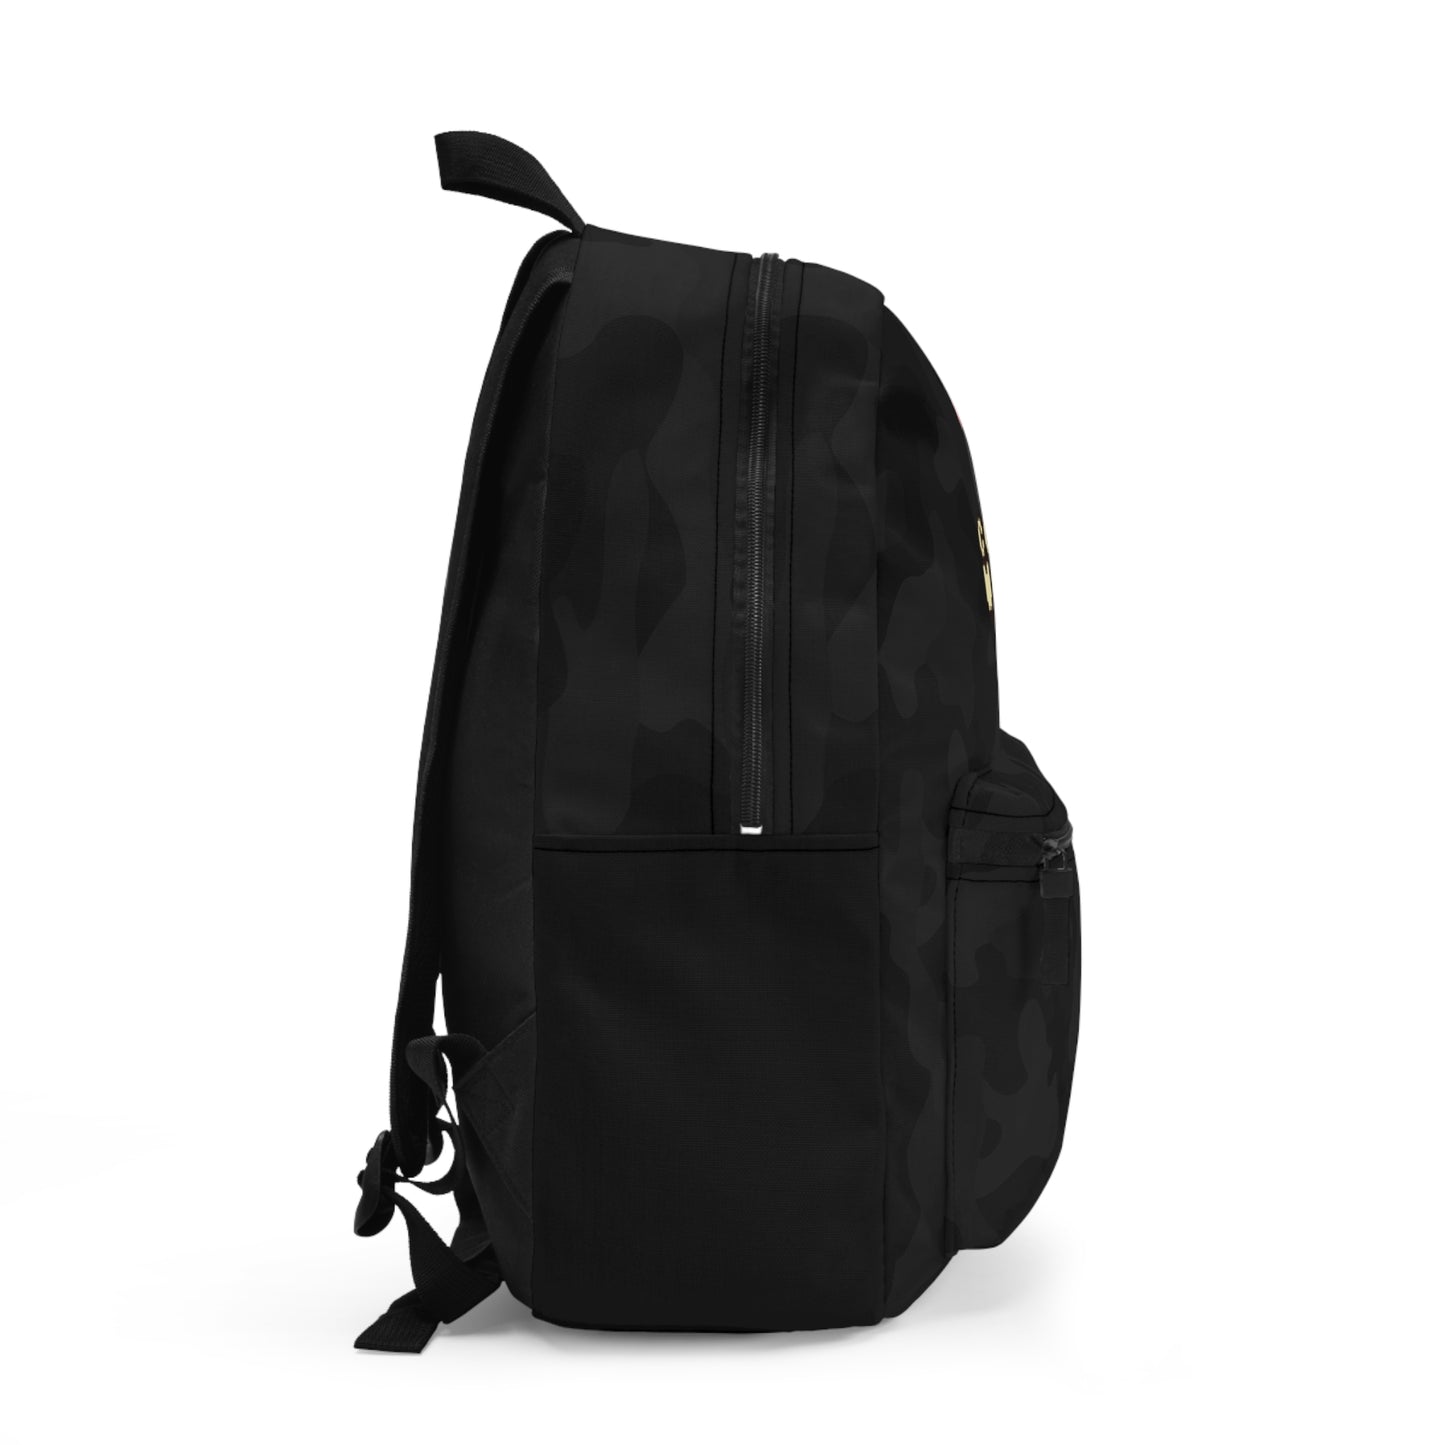 Colton World Camo Backpack